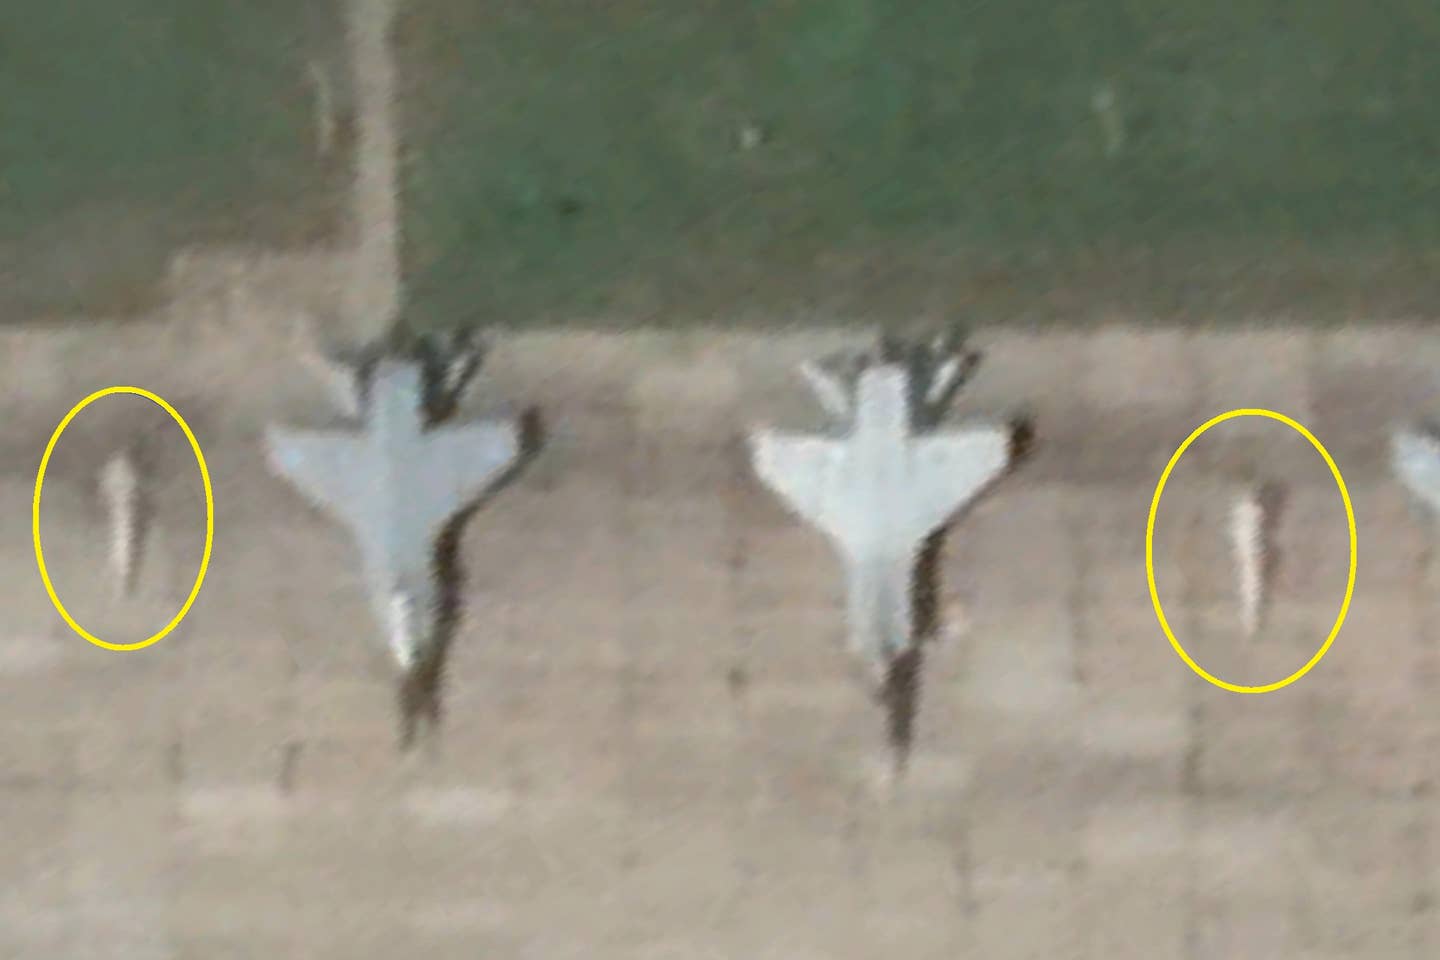 Kinzhal-capable MiG-31s and their missiles, circled, at Savasleyka Air Base in July 2022. <em>Google Earth</em>